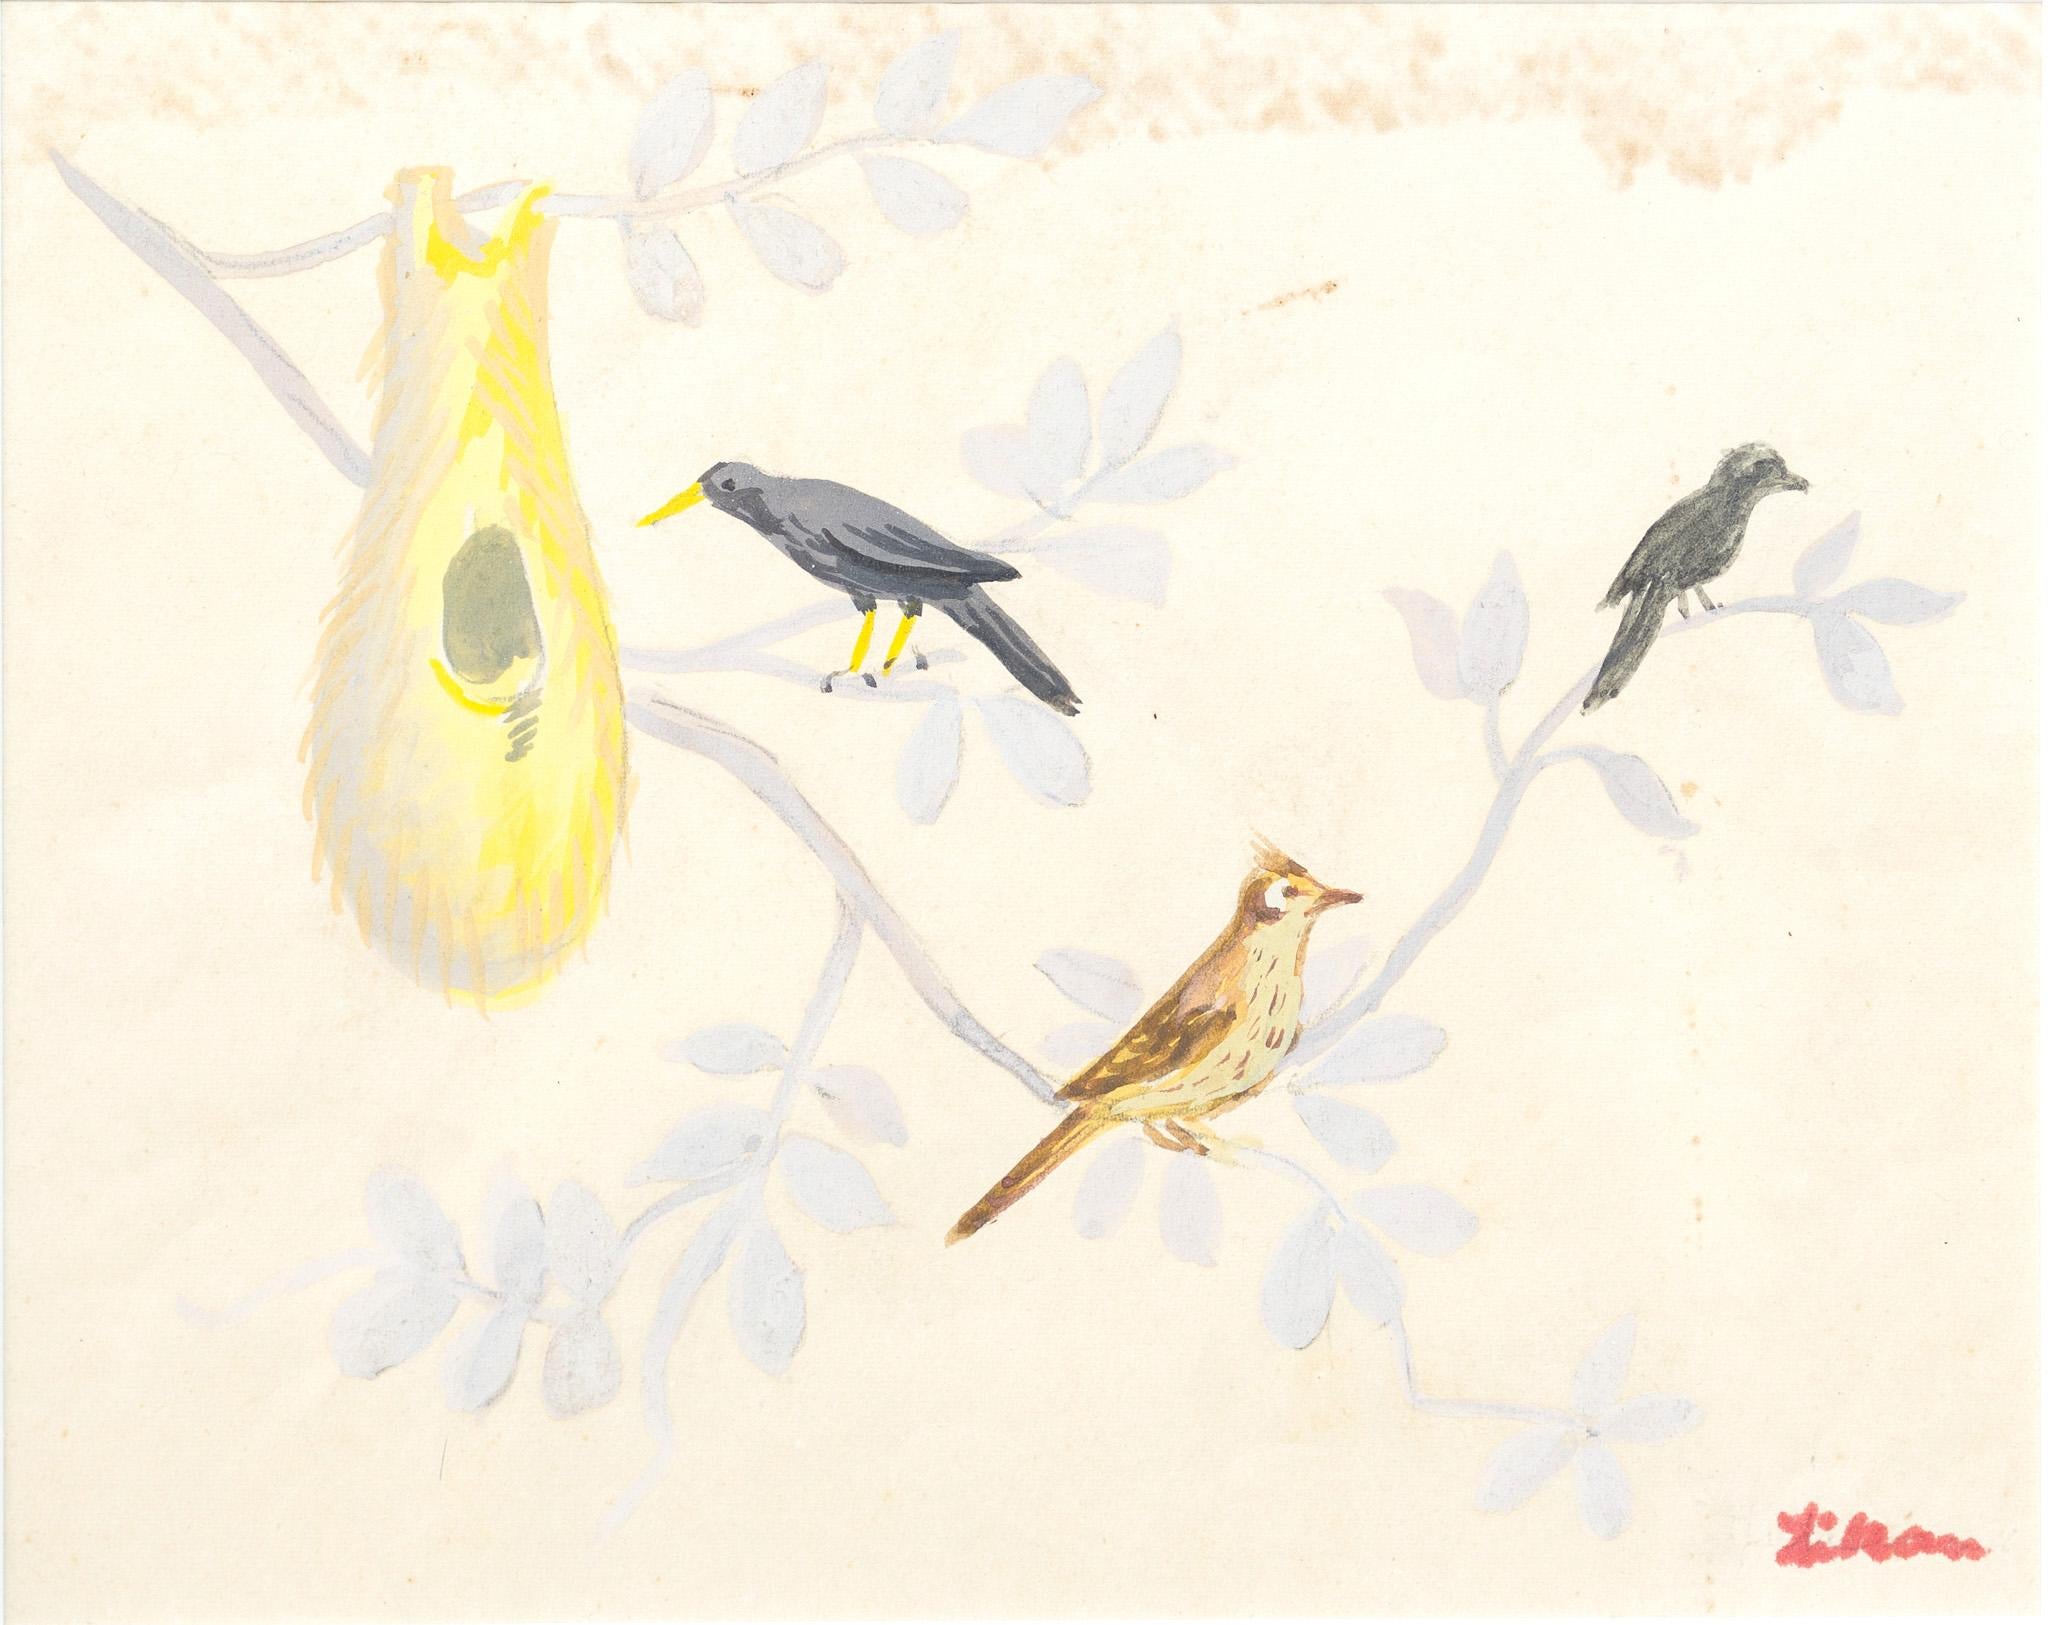 Gustav Likan Animal Art - "Three Perched Birds"